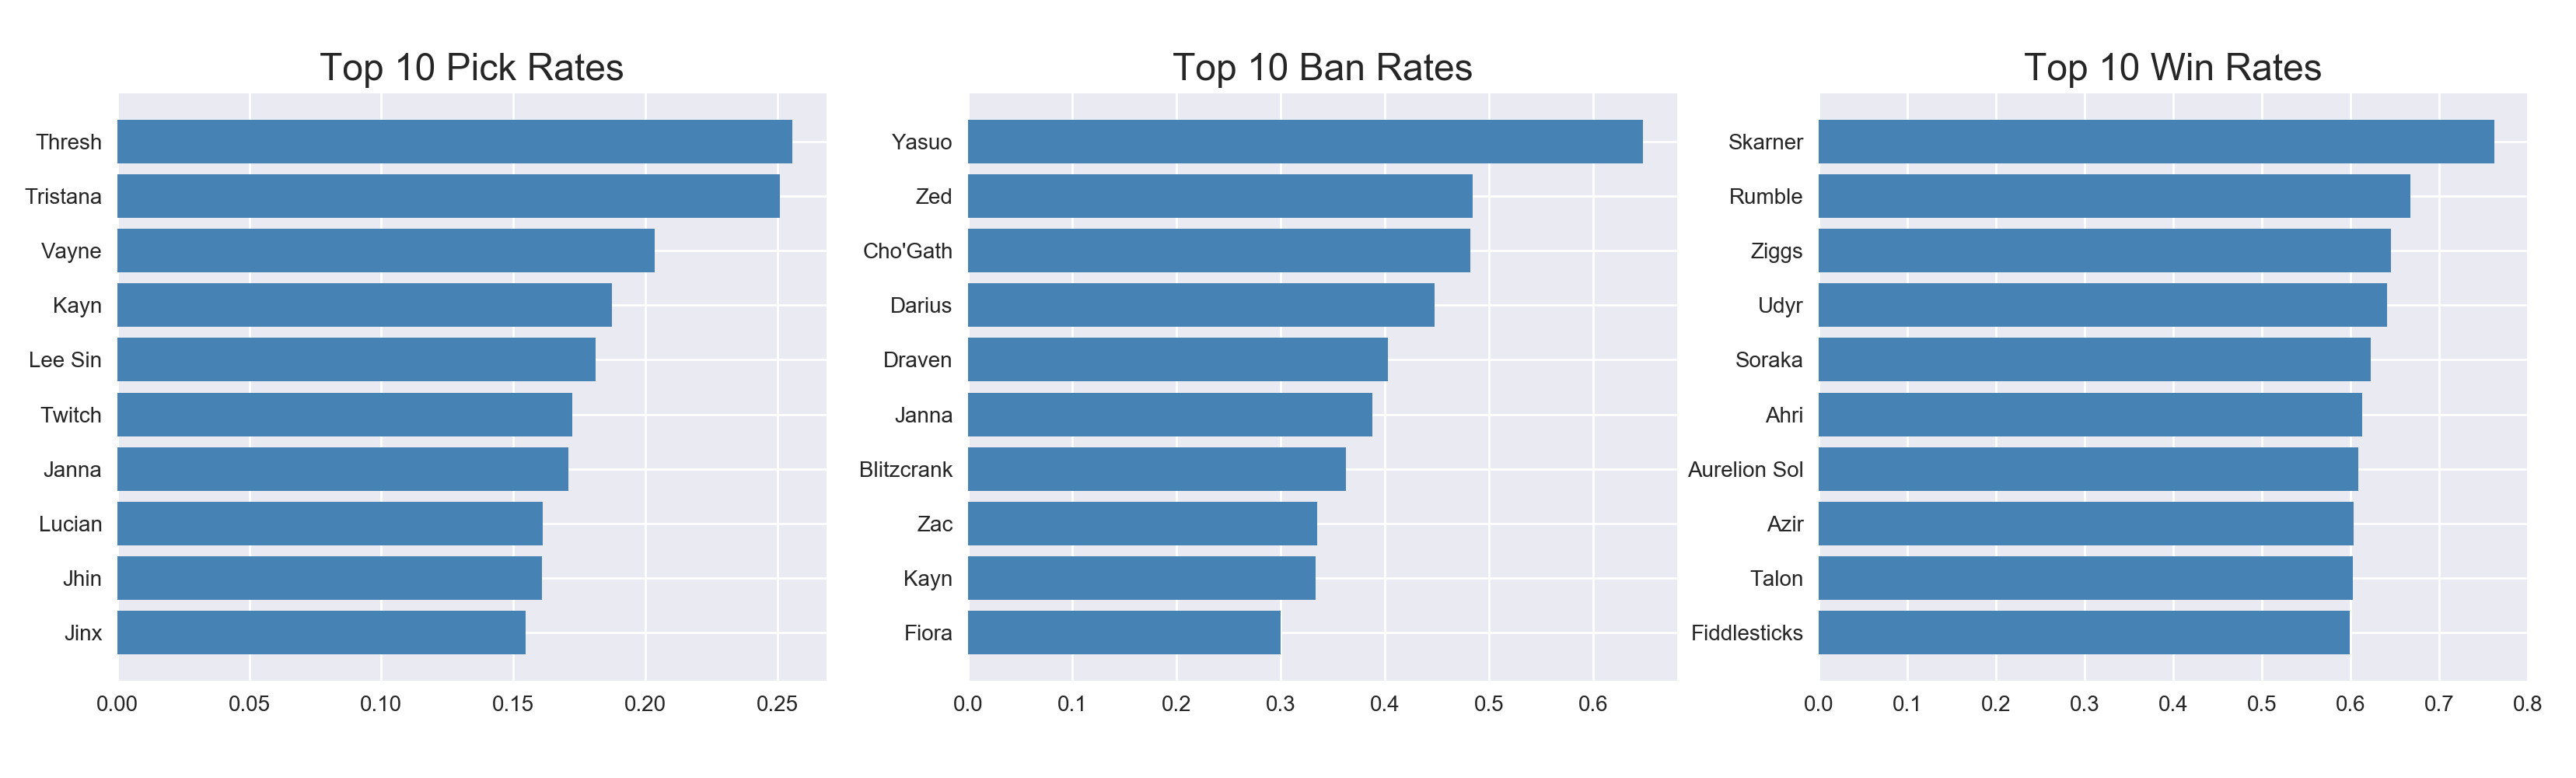 pick, ban, win rate graph